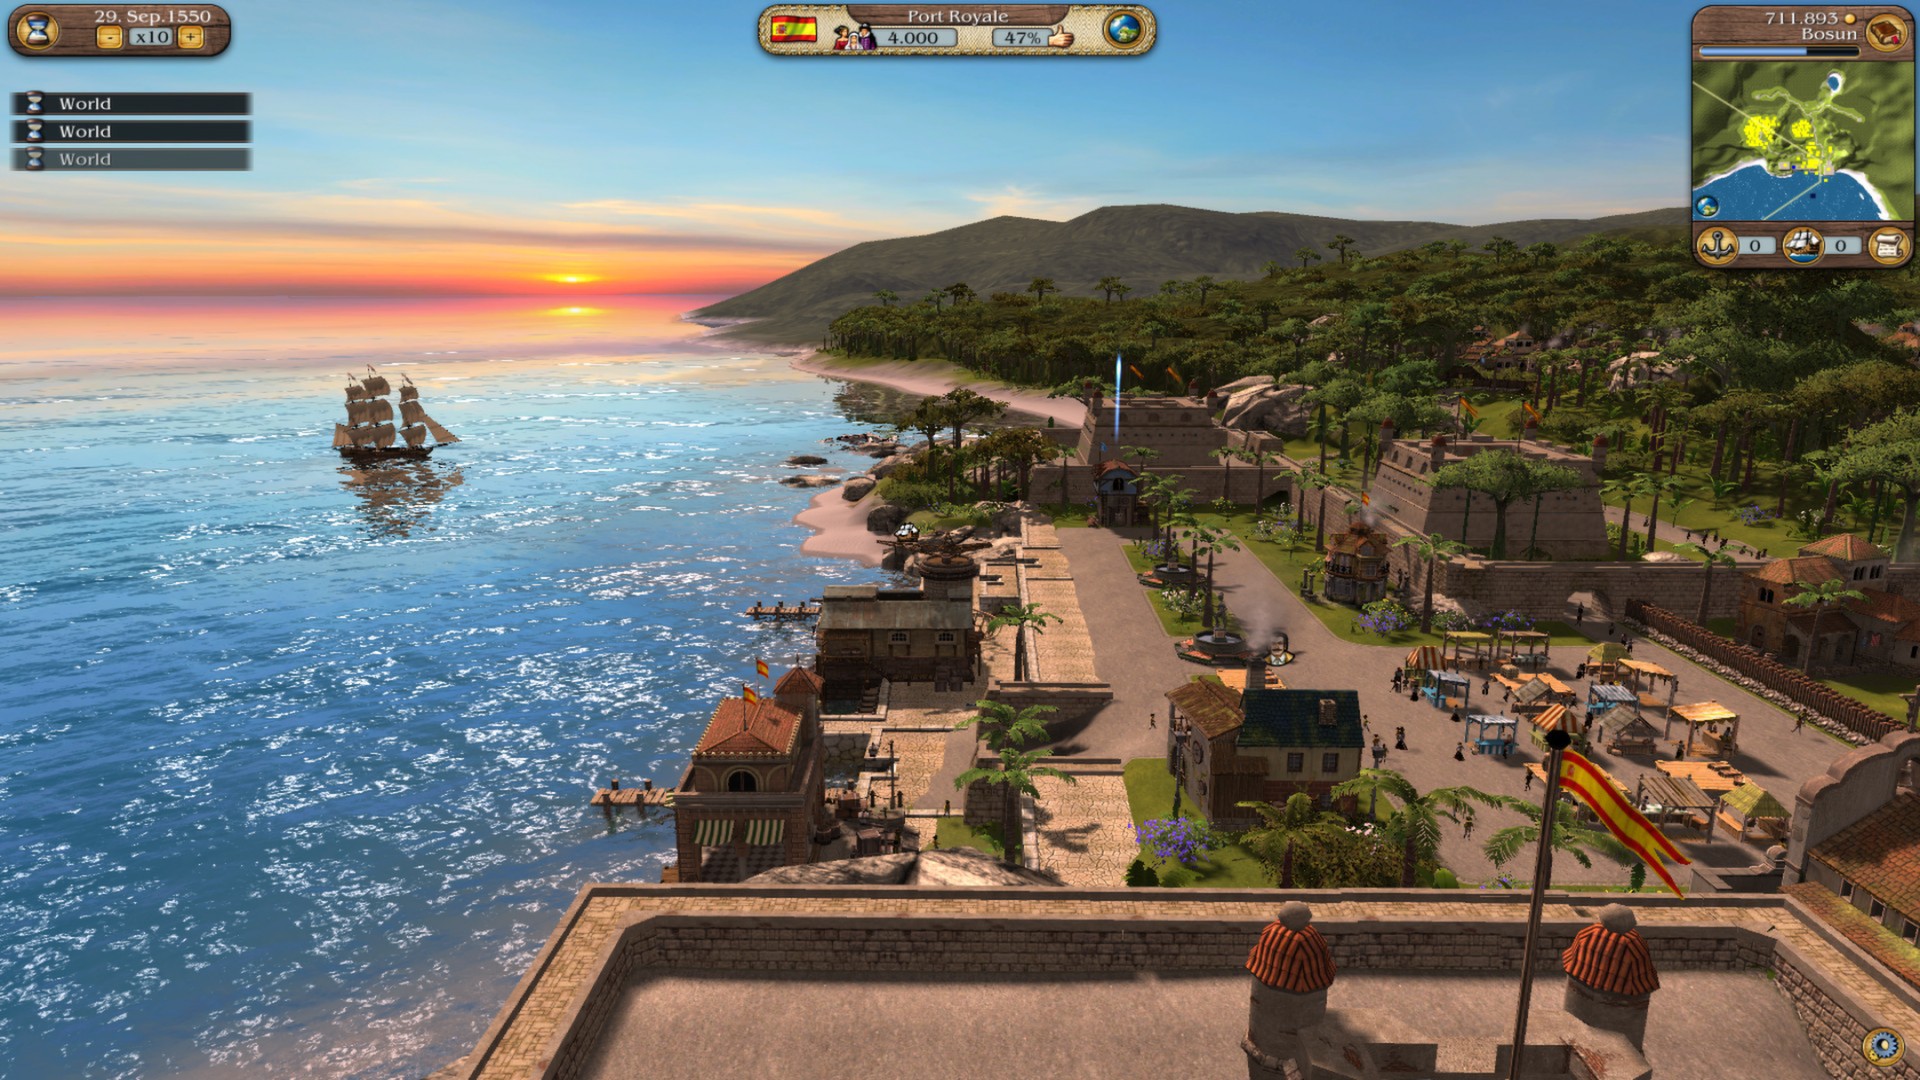 Port Royale 3: New Adventures DLC Featured Screenshot #1